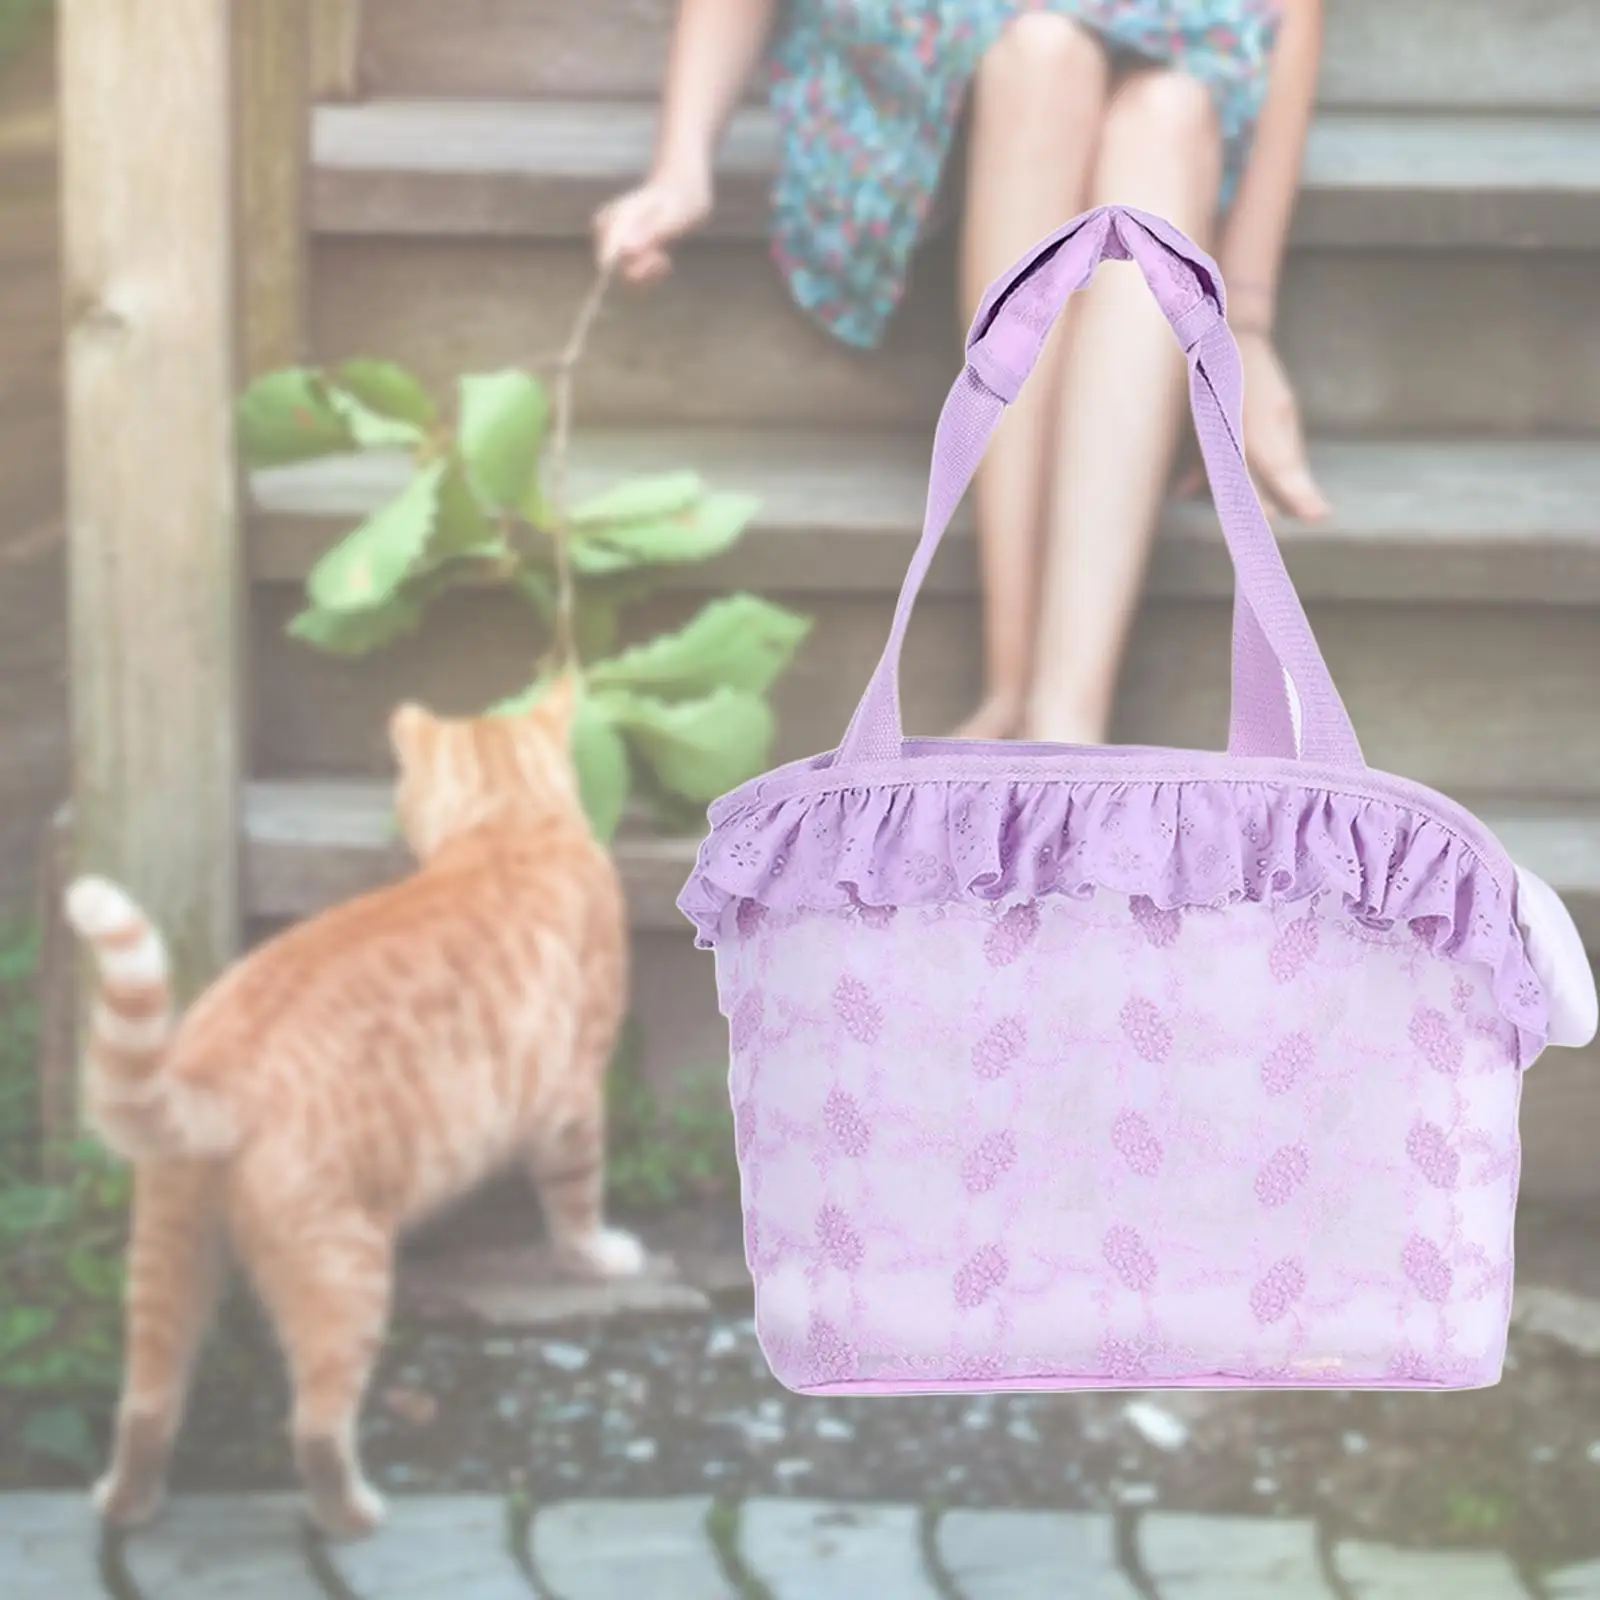 Cat Carrier with Leash Hook Kitten Travel Bag Transport Bag Pet Carrier Bag Carrying Handbag for Shopping Outdoor Hiking